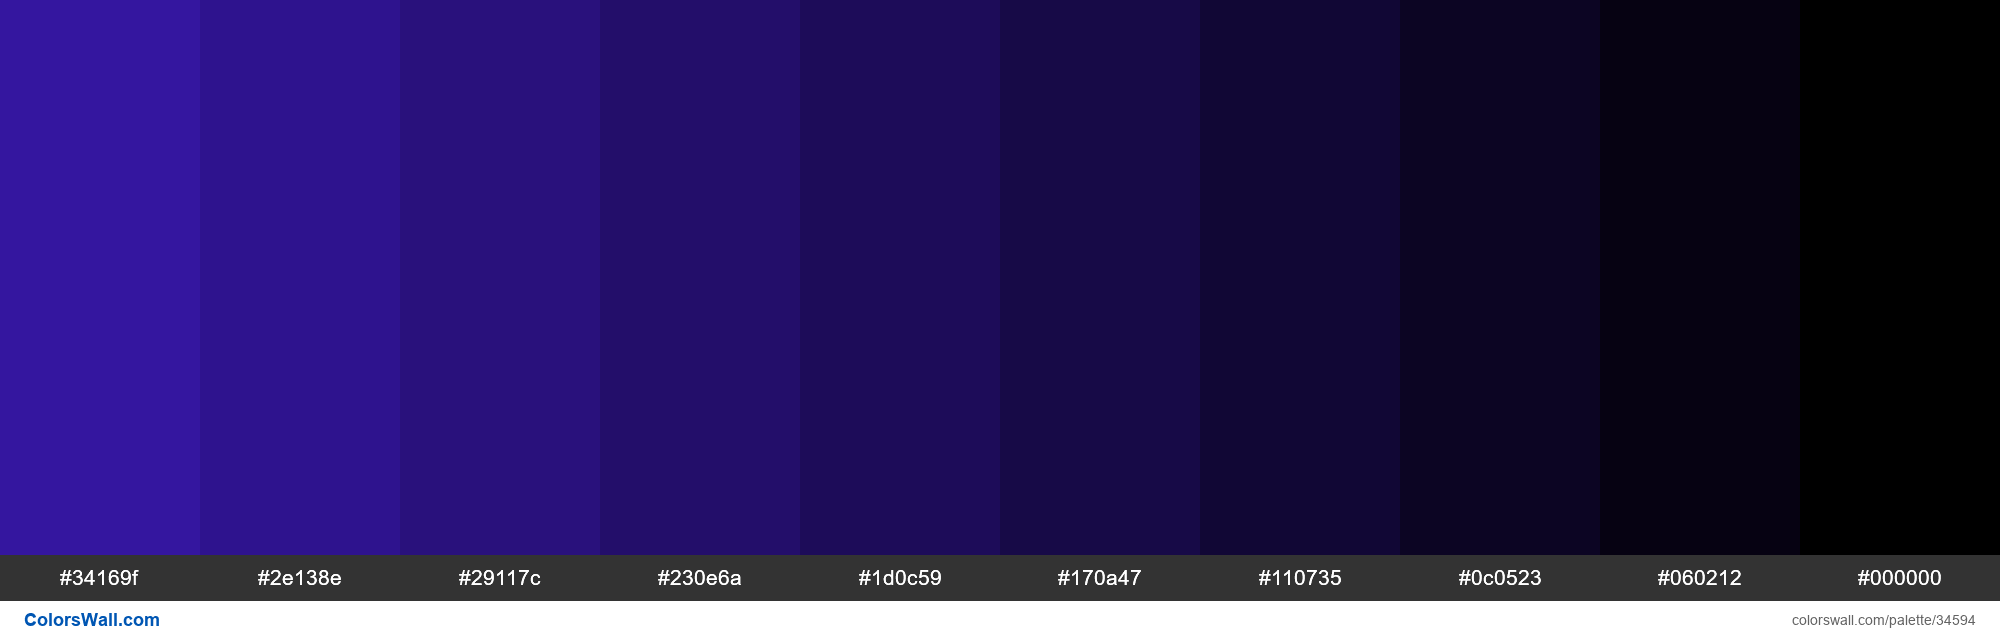 https://colorswall.com/images/palettes/shades-xkcd-color-indigo-blue-3a18b1-hex-34594-colorswall.png